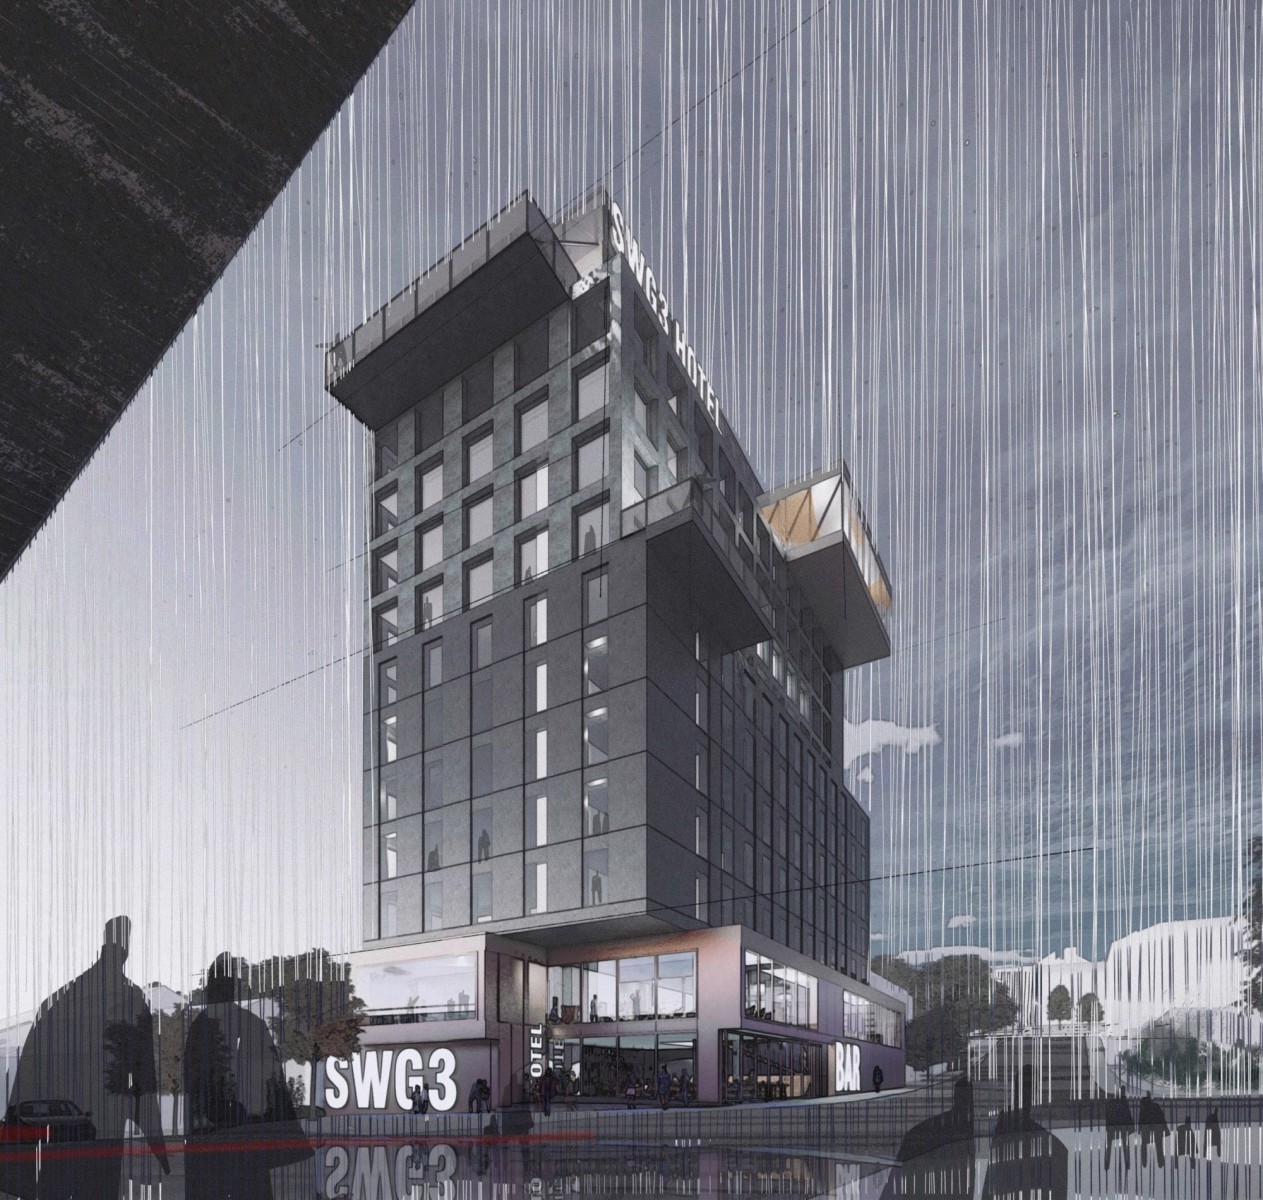 Glasgow arts venue SWG3 unveils hotel vision